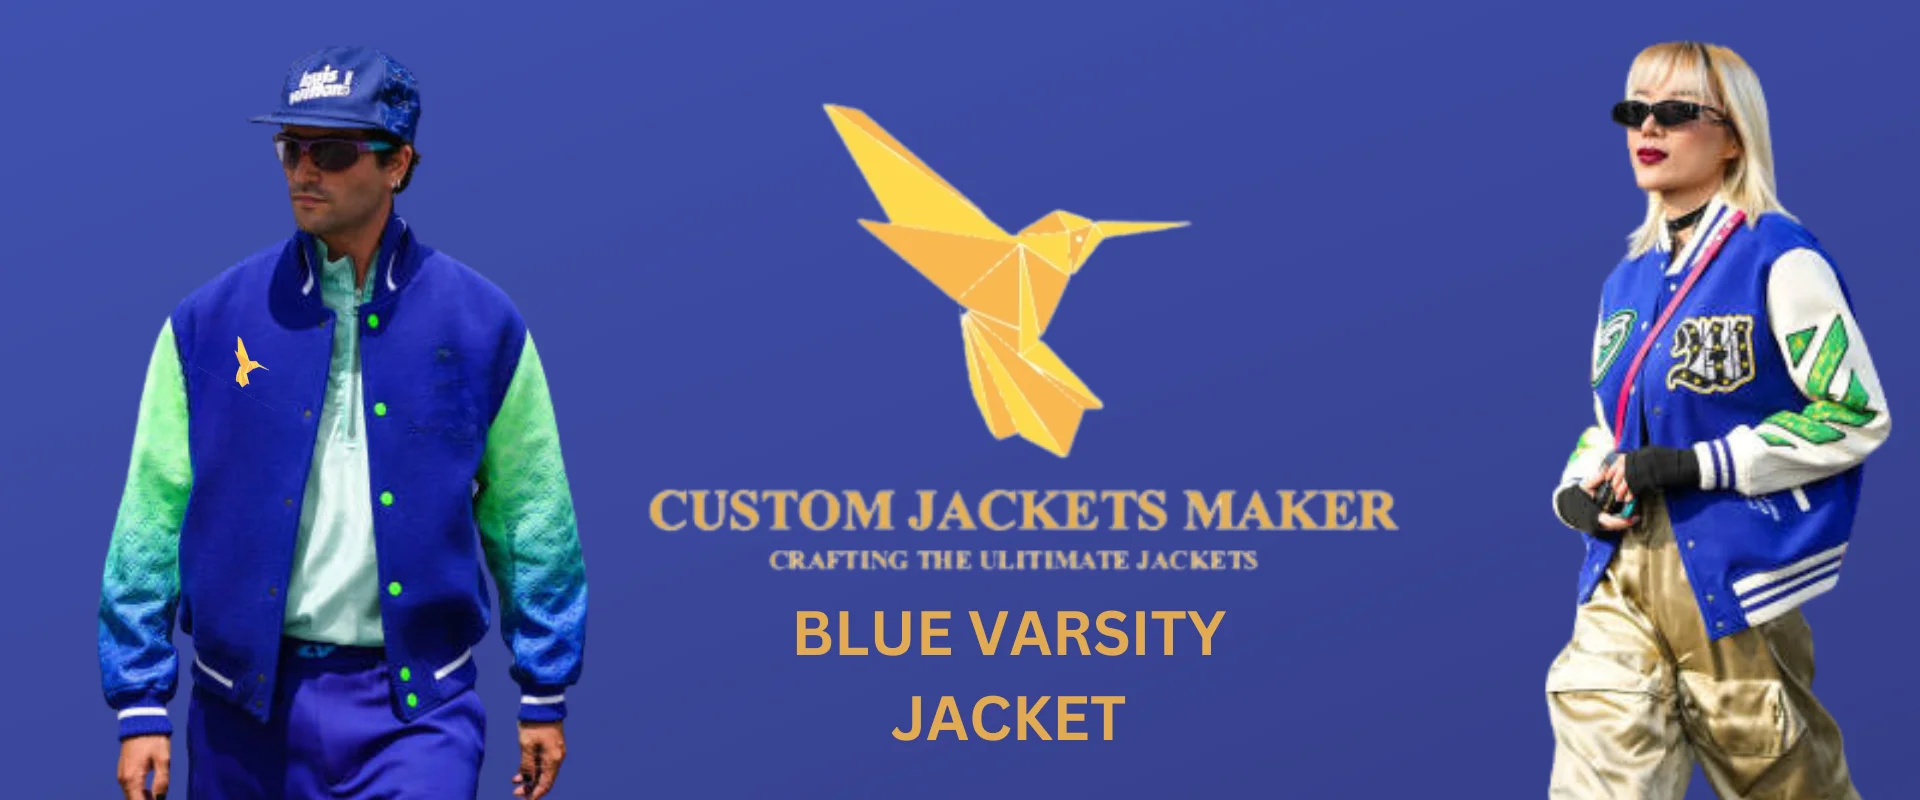 Banner Image of Blue Varsity Jacket 